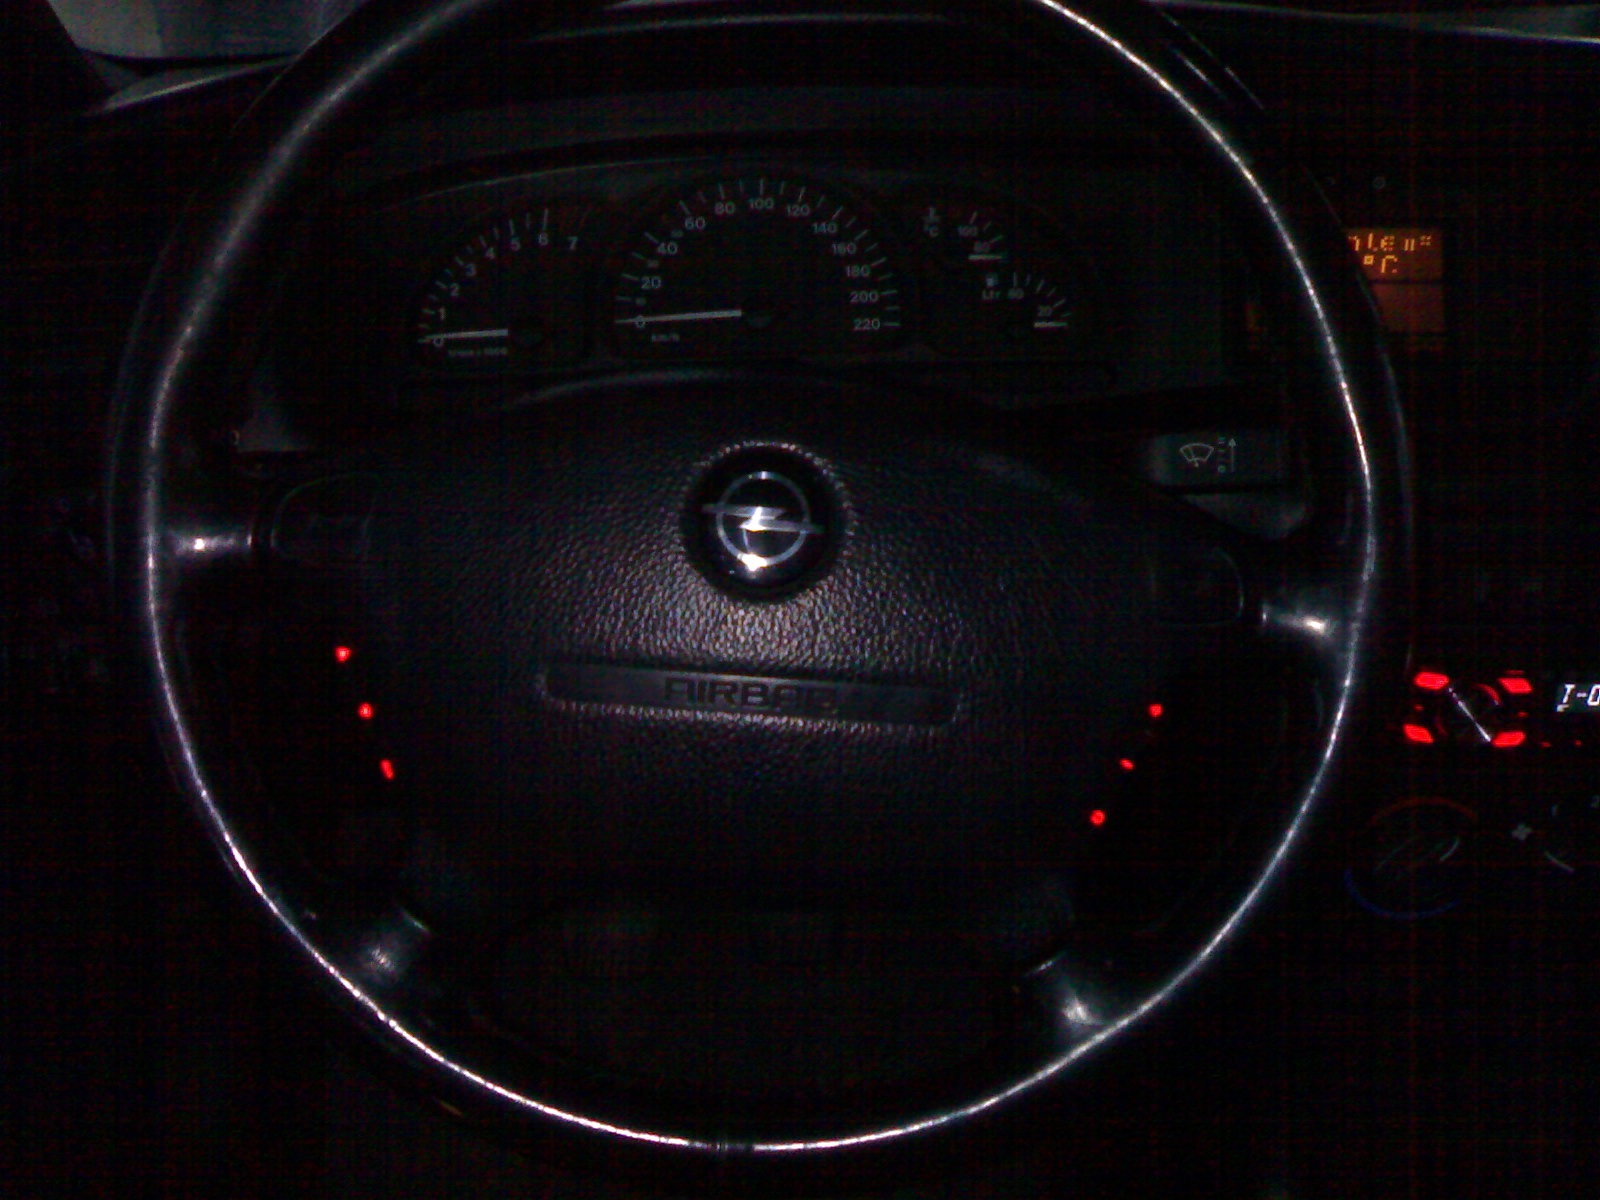 Подсветка опель вектра б. Подсветка руля Opel Vectra b. Опель Vectra кнопки на руле. Подсветка кнопок Опель Вектра б. Кнопки руля Опель Вектра с.